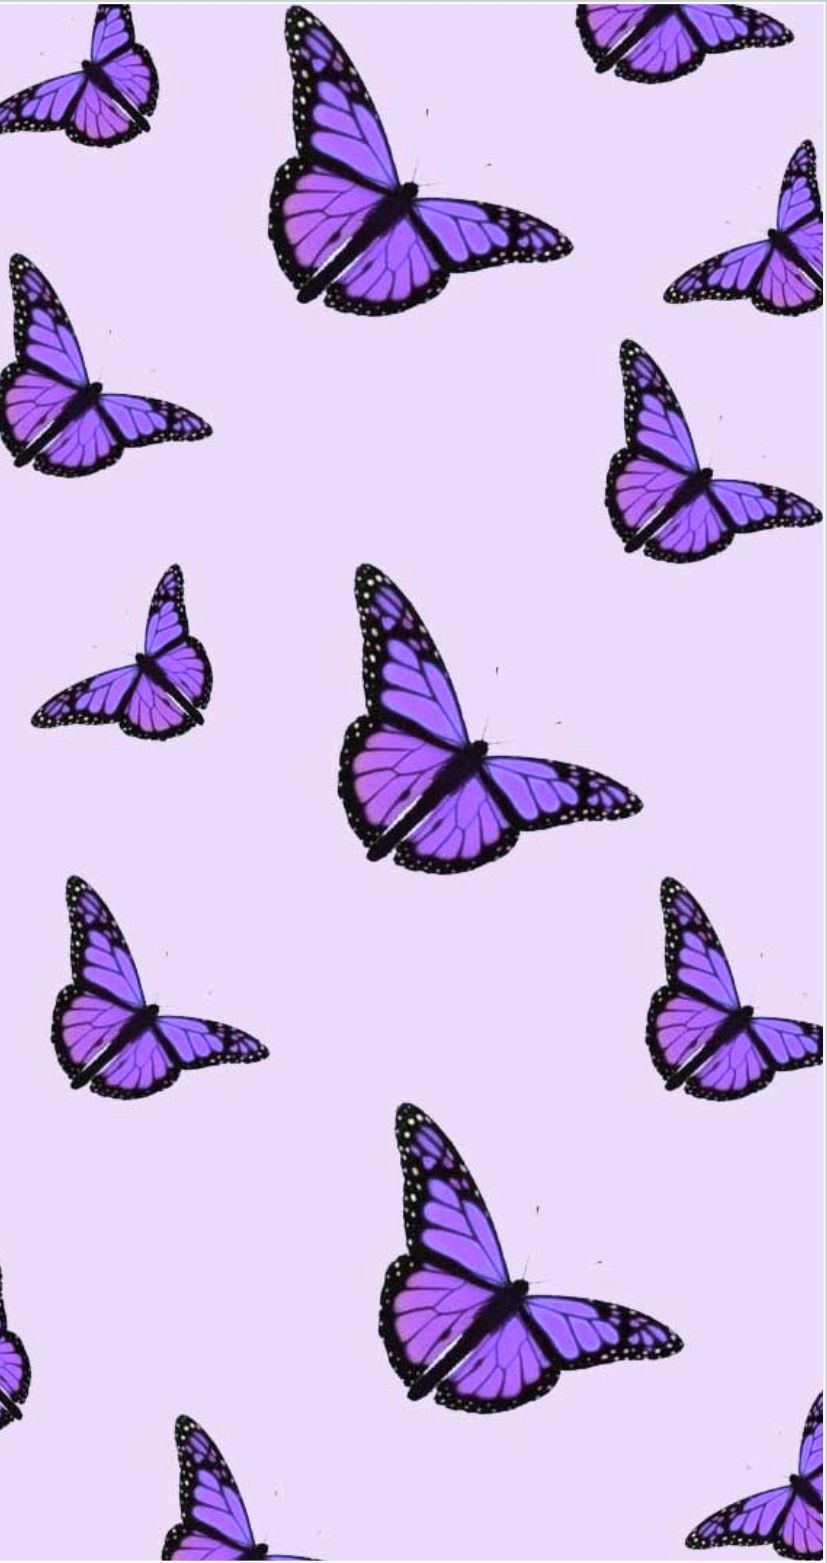 A purple butterfly pattern on pink background - Butterfly